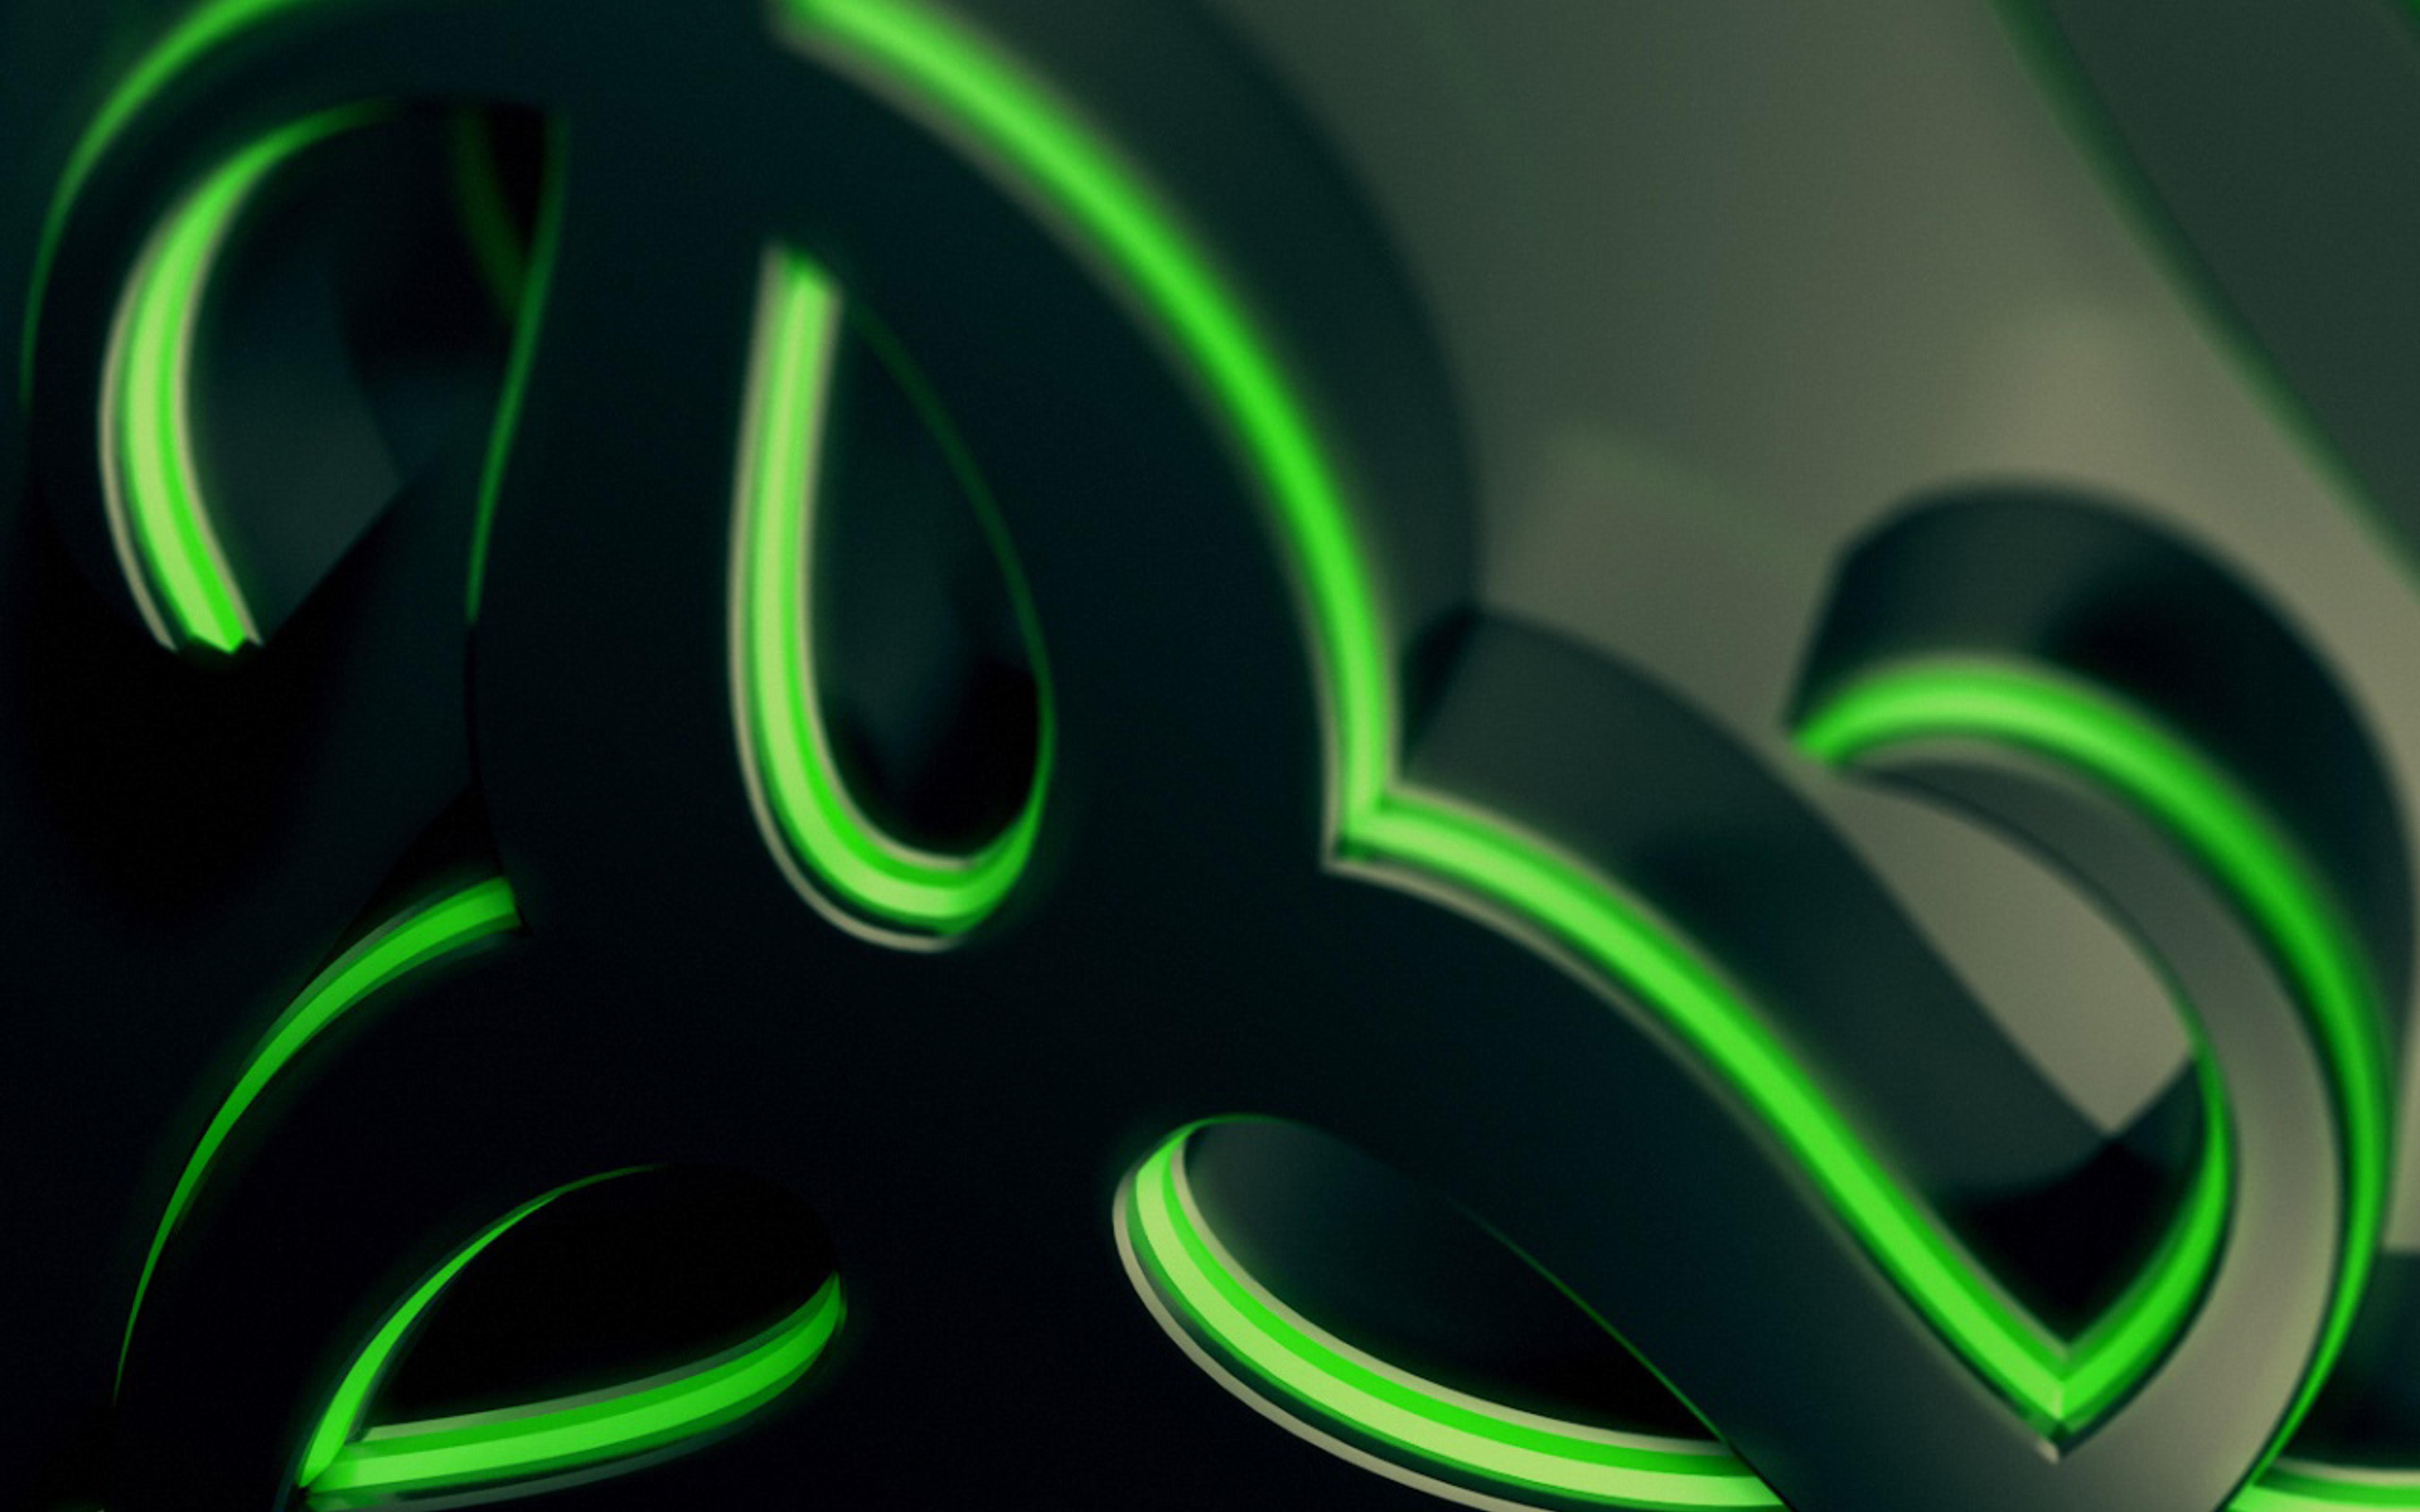 Abstract green and black wallpaper - Razer gaming